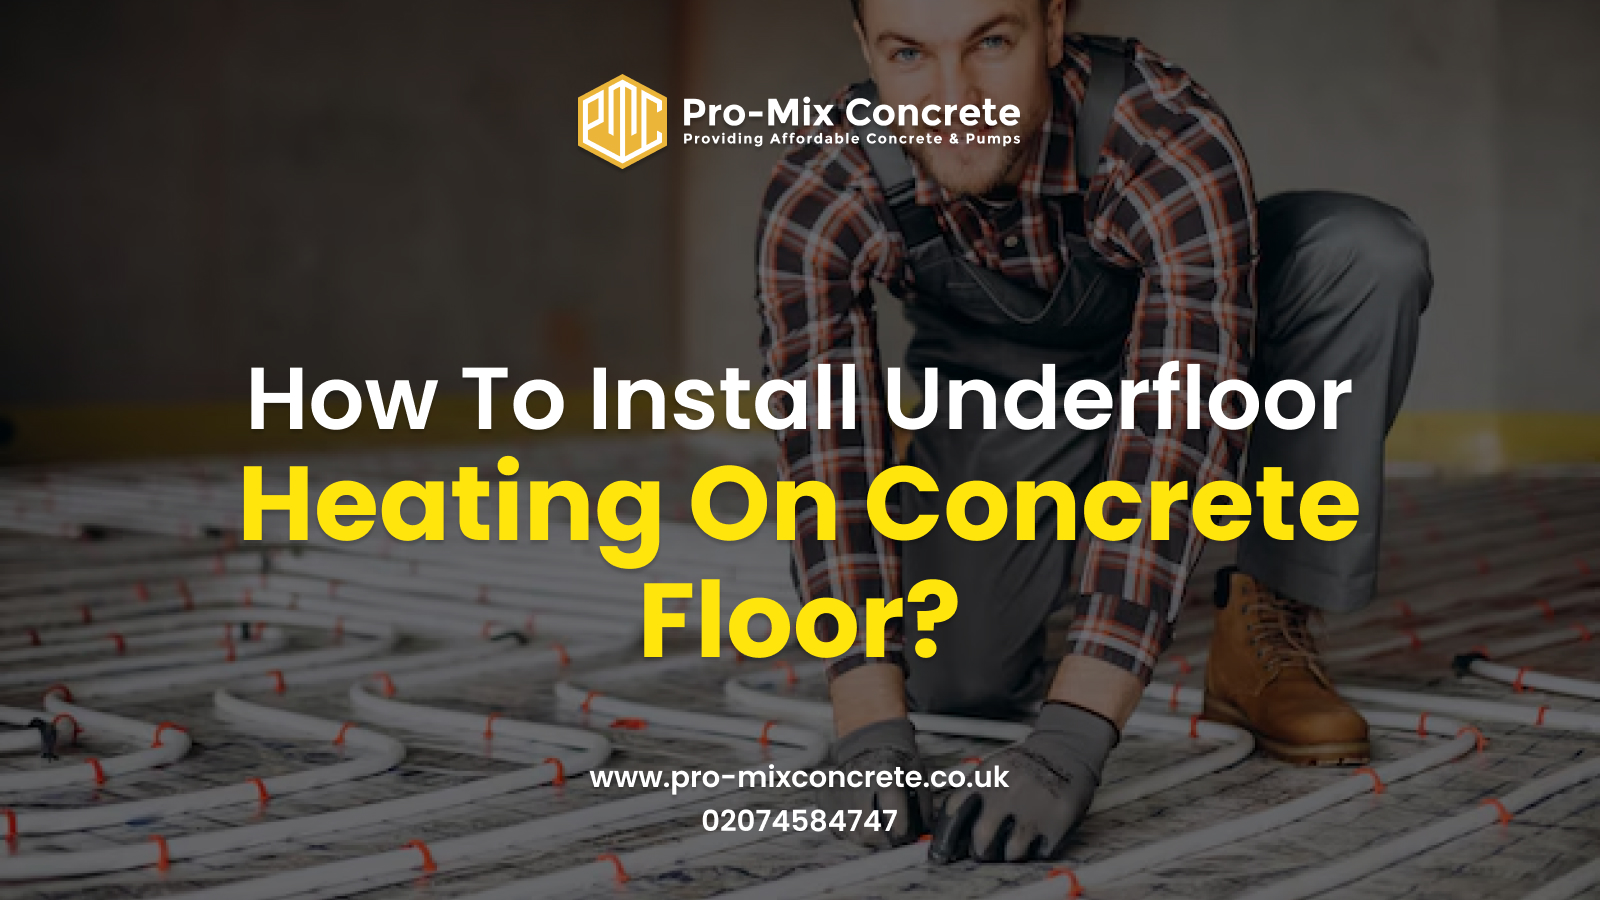 How To Install Underfloor Heating On Concrete Floor?